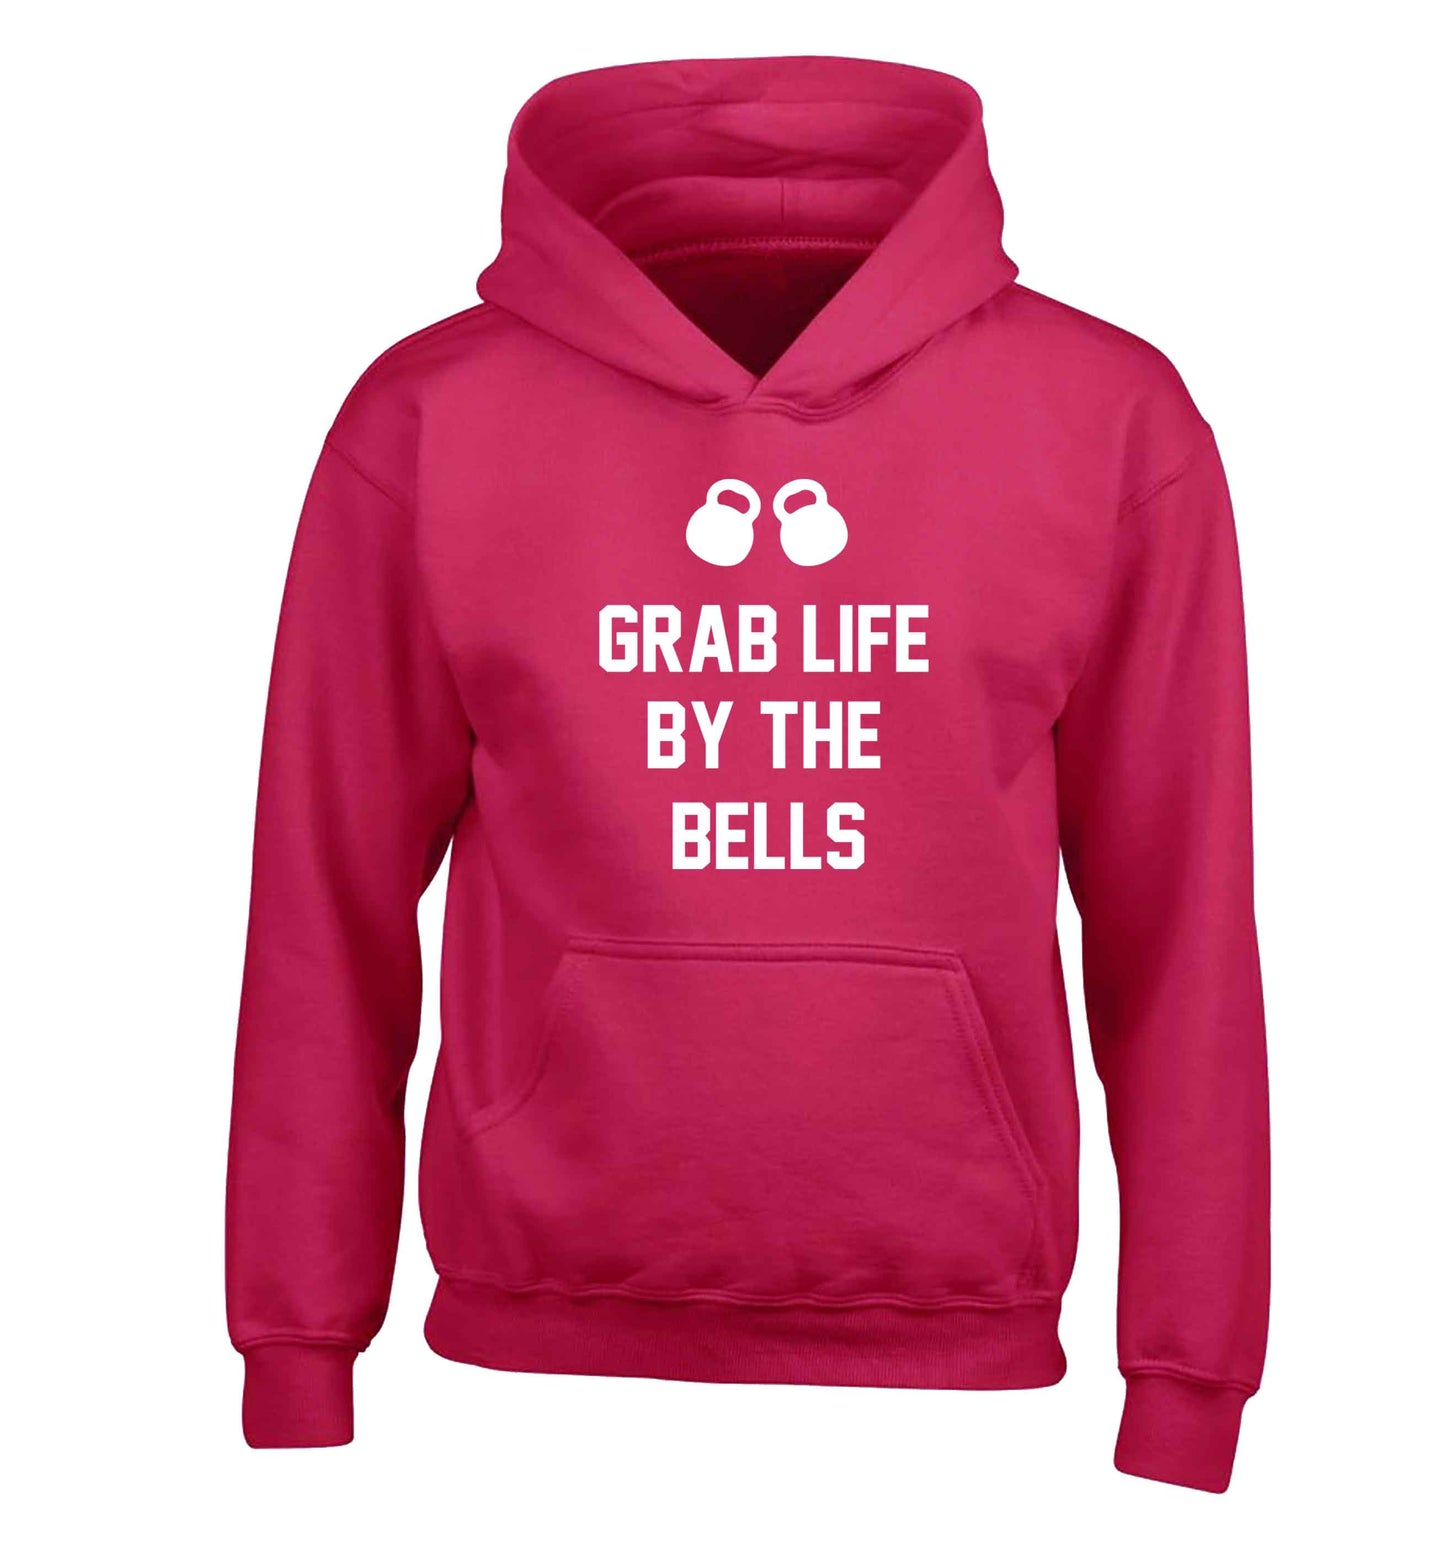 Grab life by the bells children's pink hoodie 12-13 Years